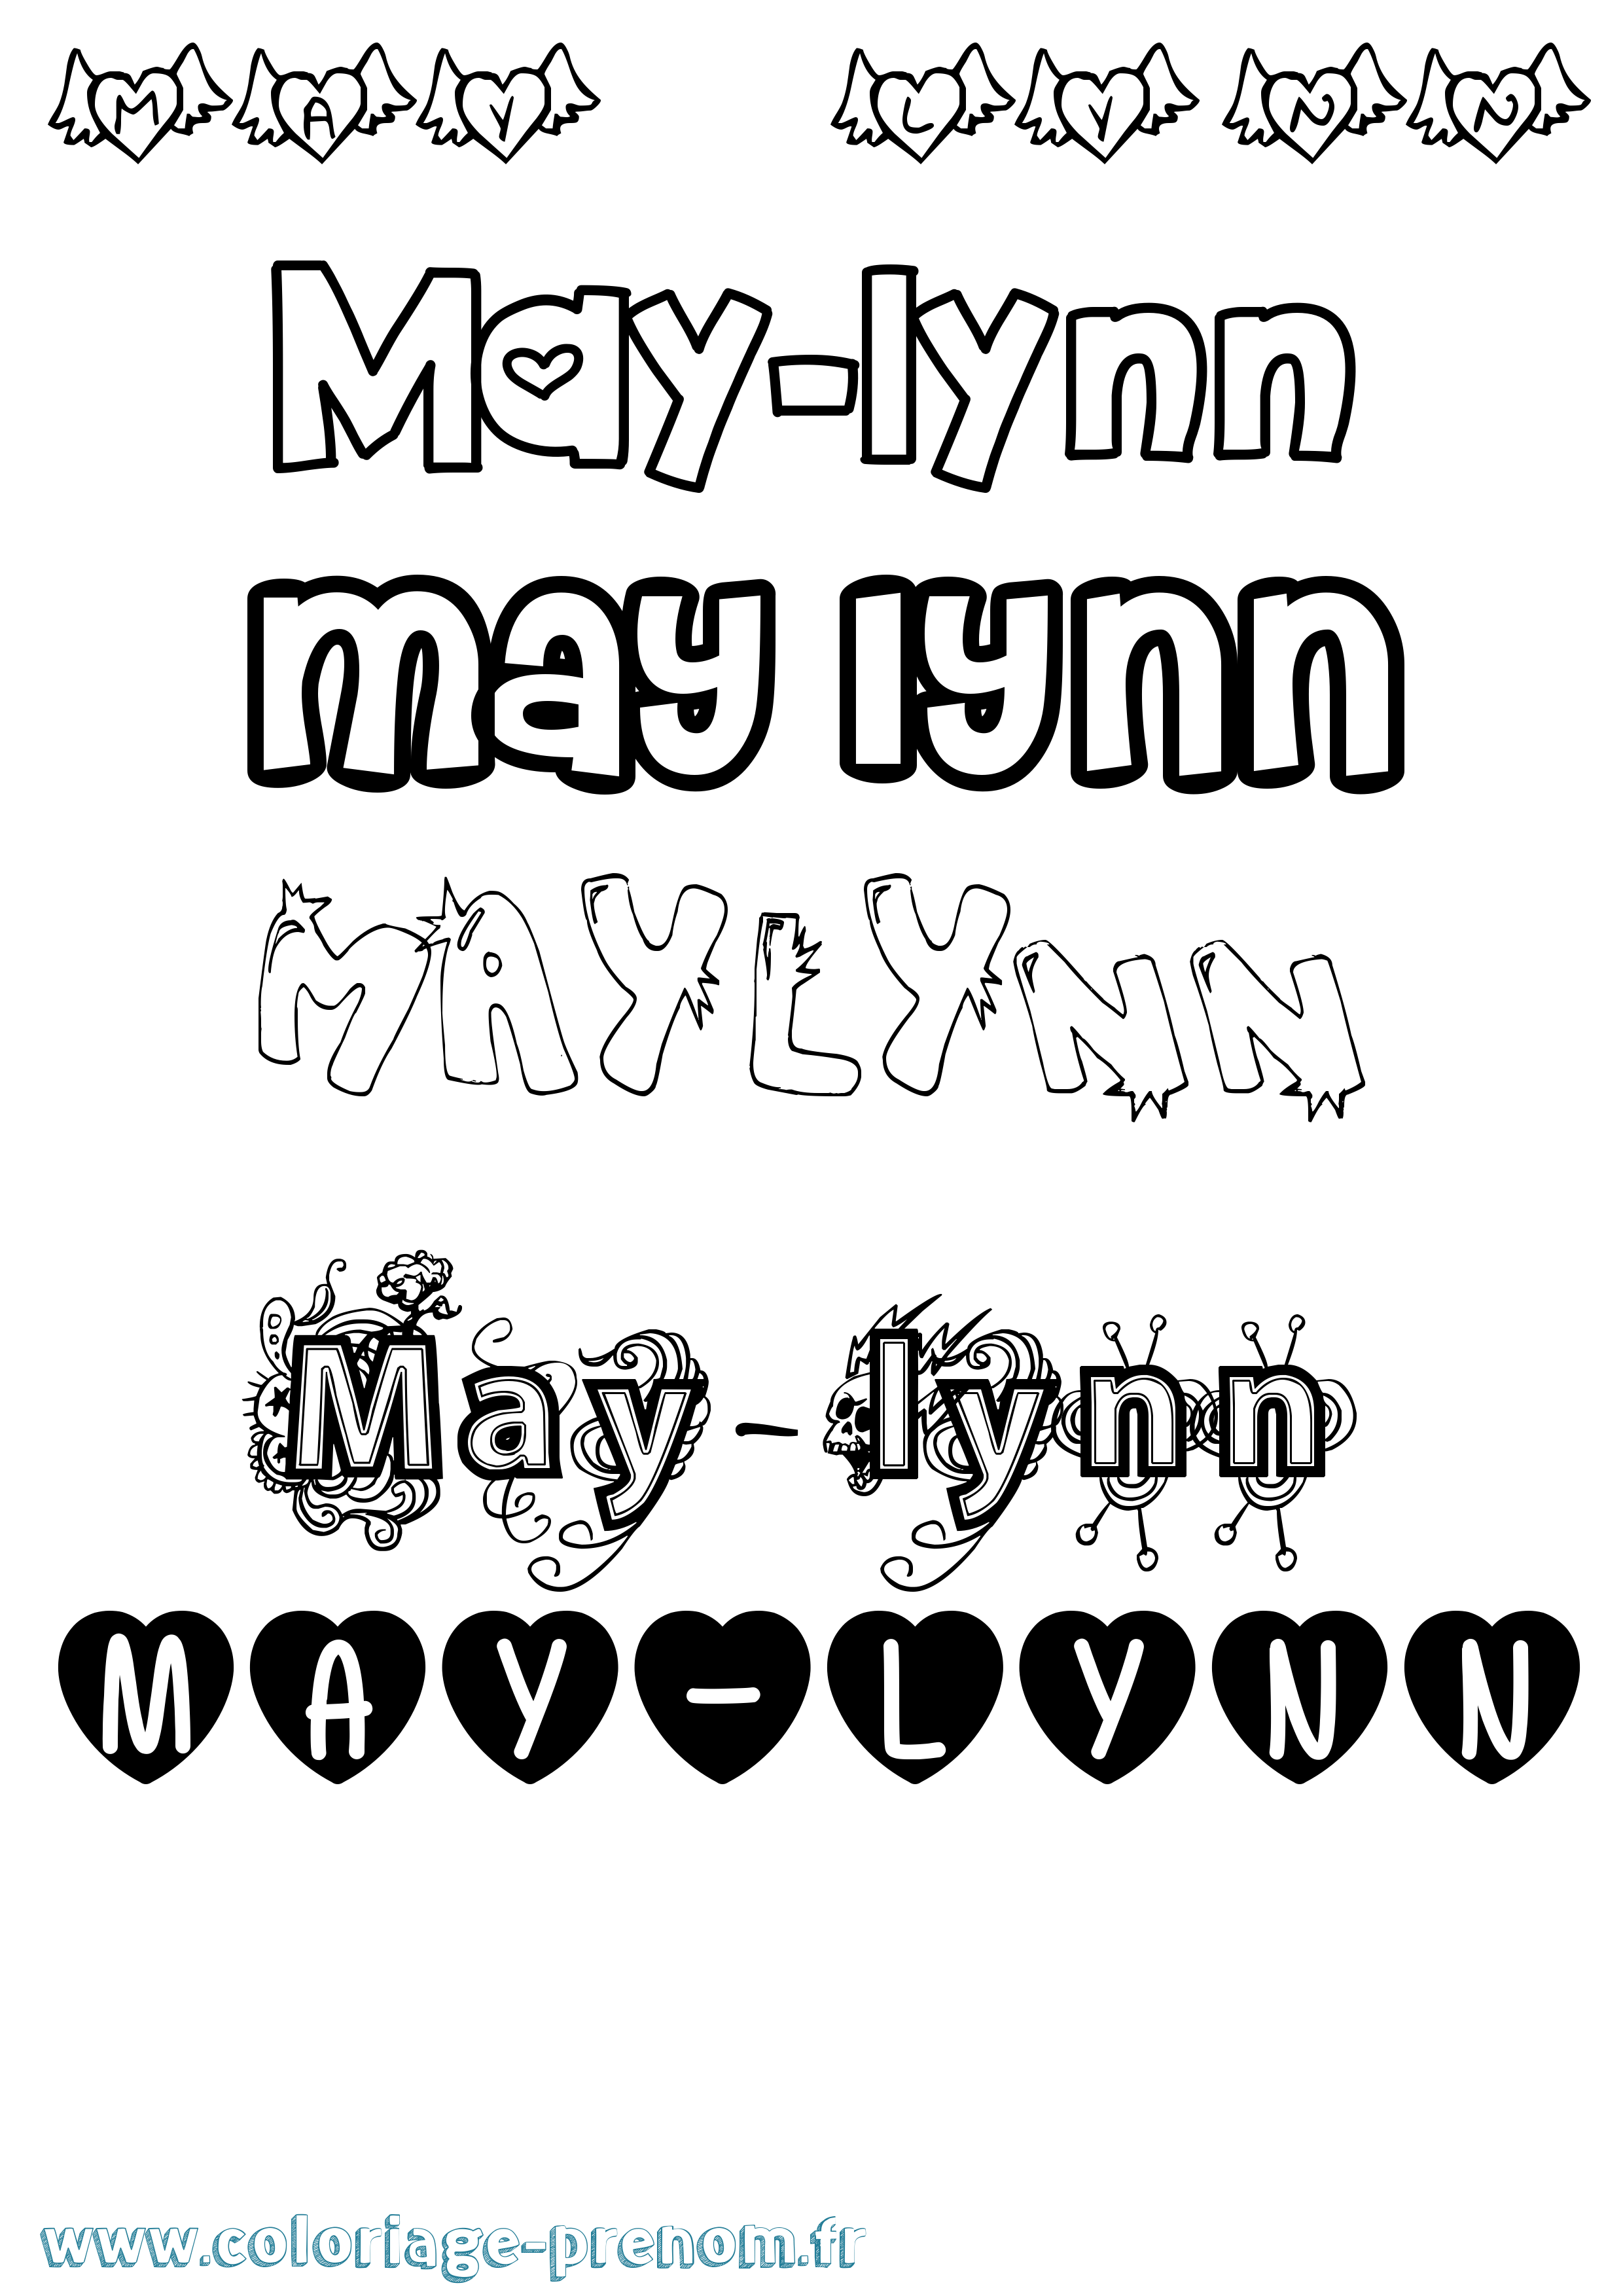 Coloriage prénom May-Lynn Girly